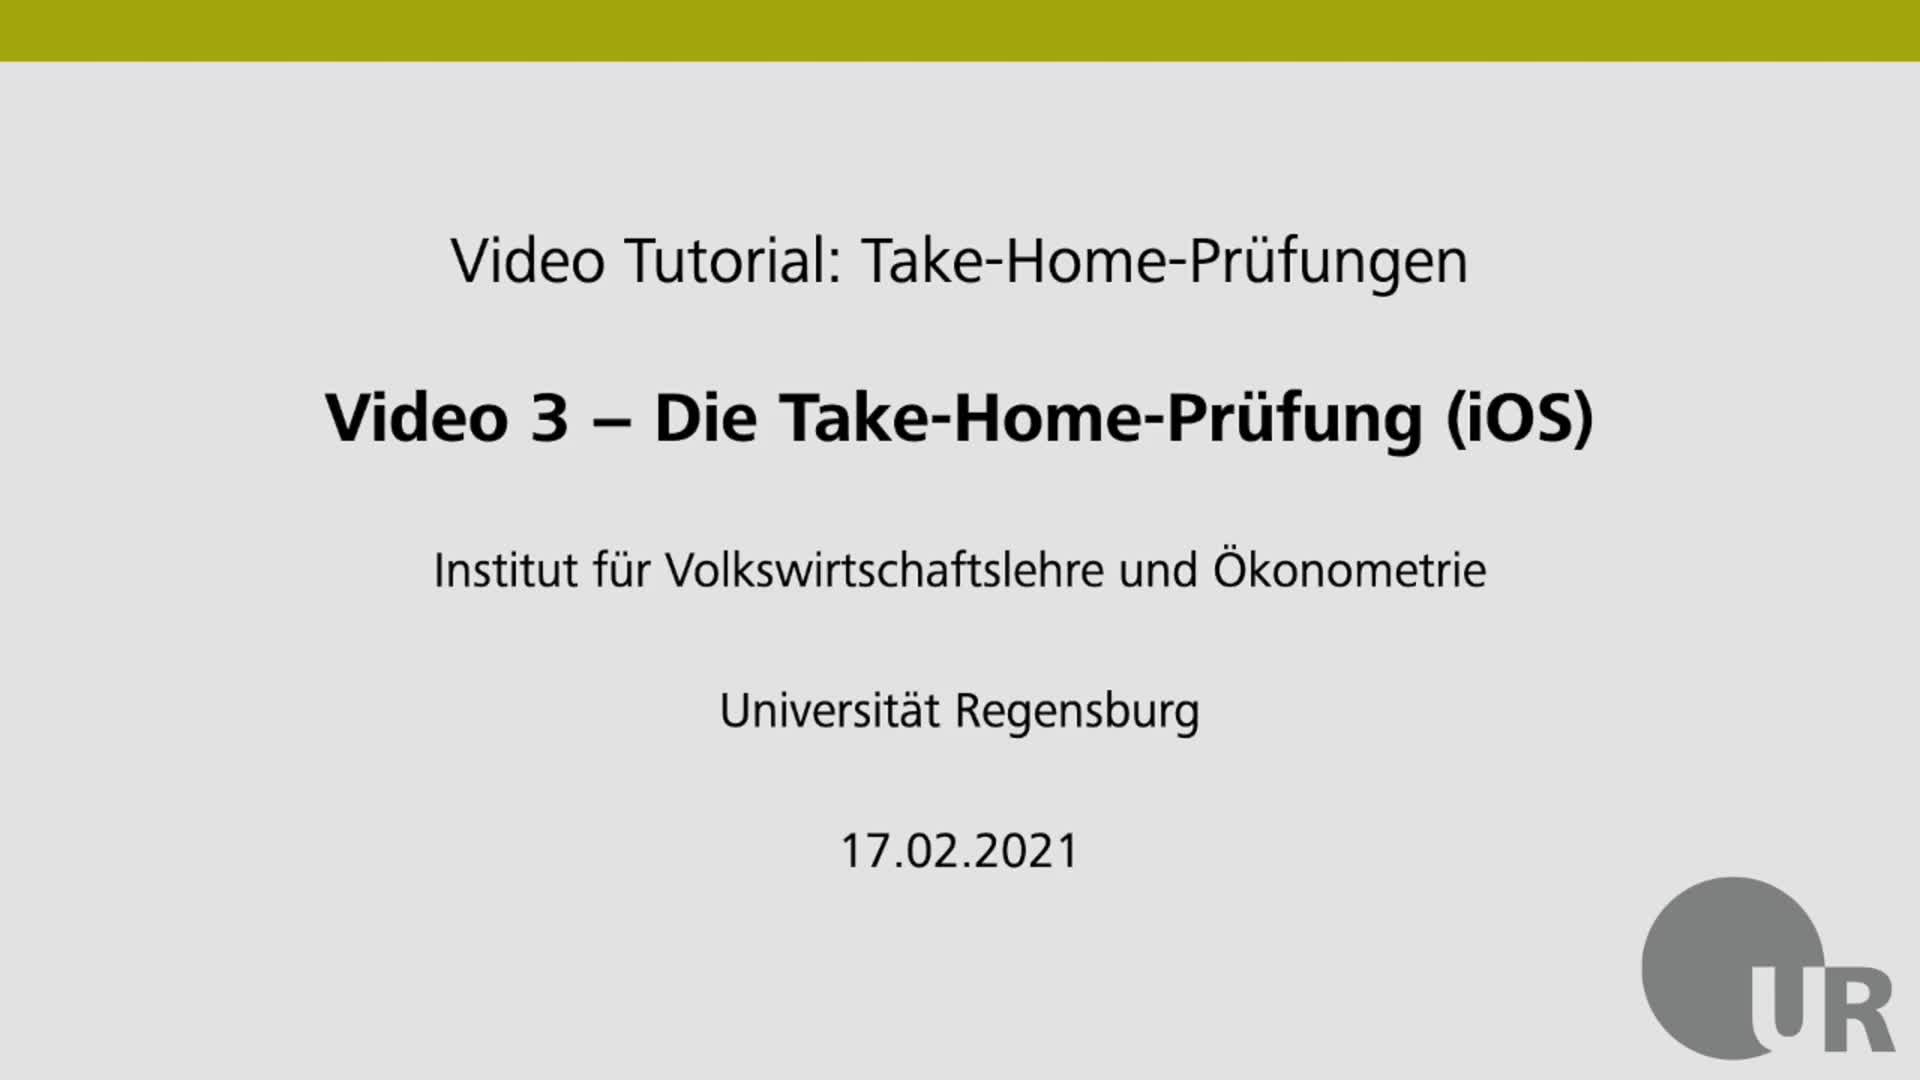 Video 3 - Die Take-Home-Prüfung (iOS)